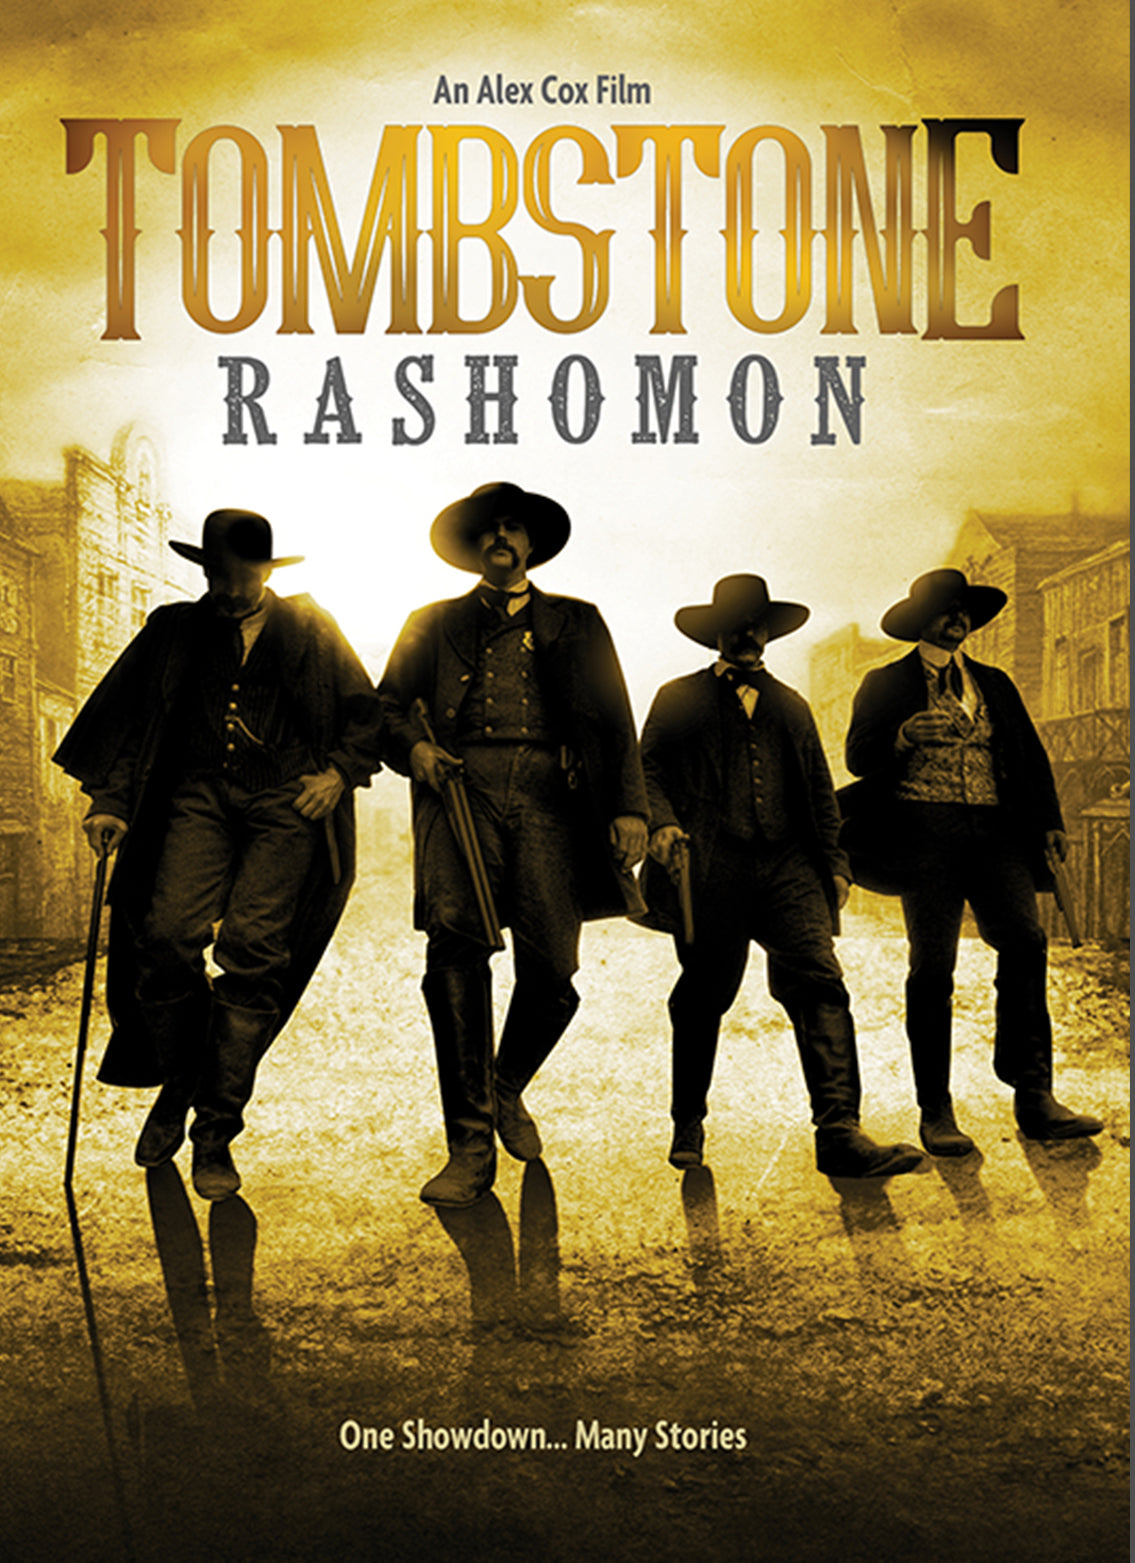 Tombstone Rashomon cover art